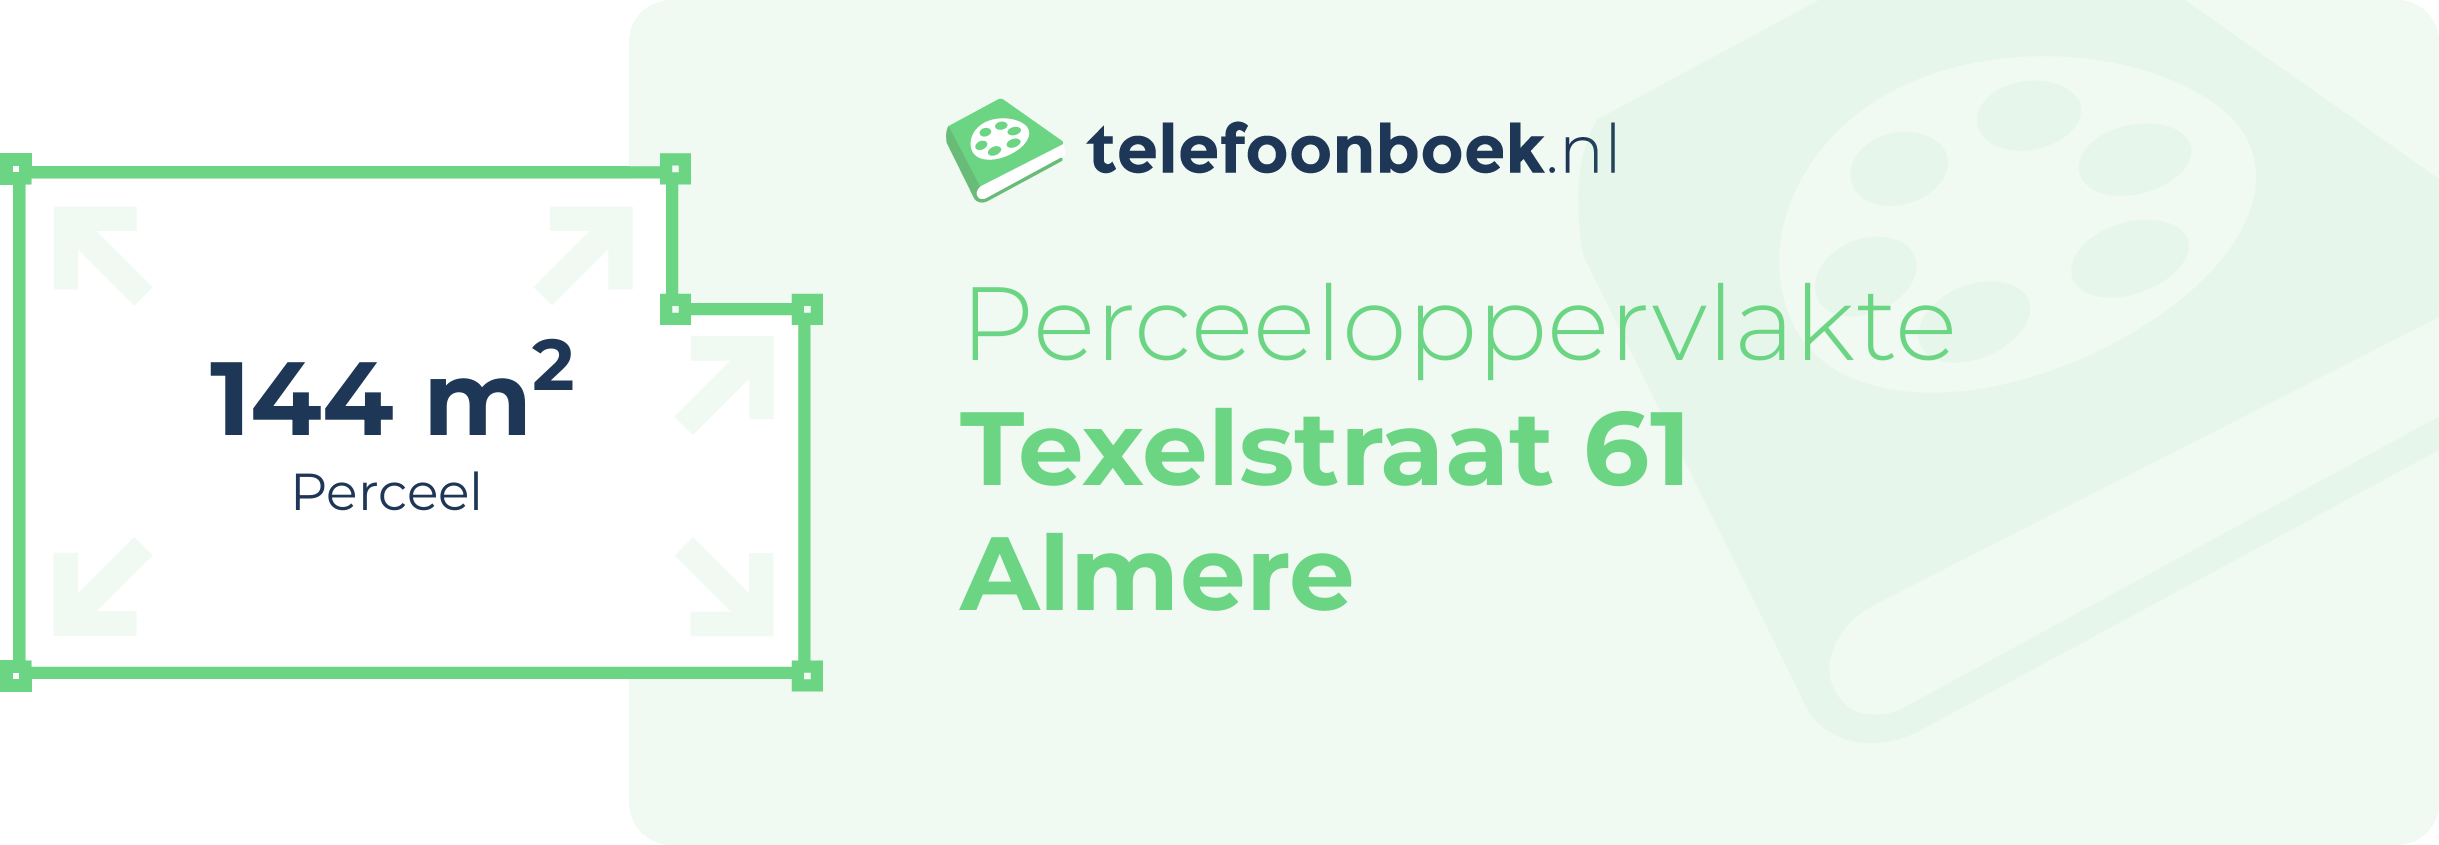 Perceeloppervlakte Texelstraat 61 Almere